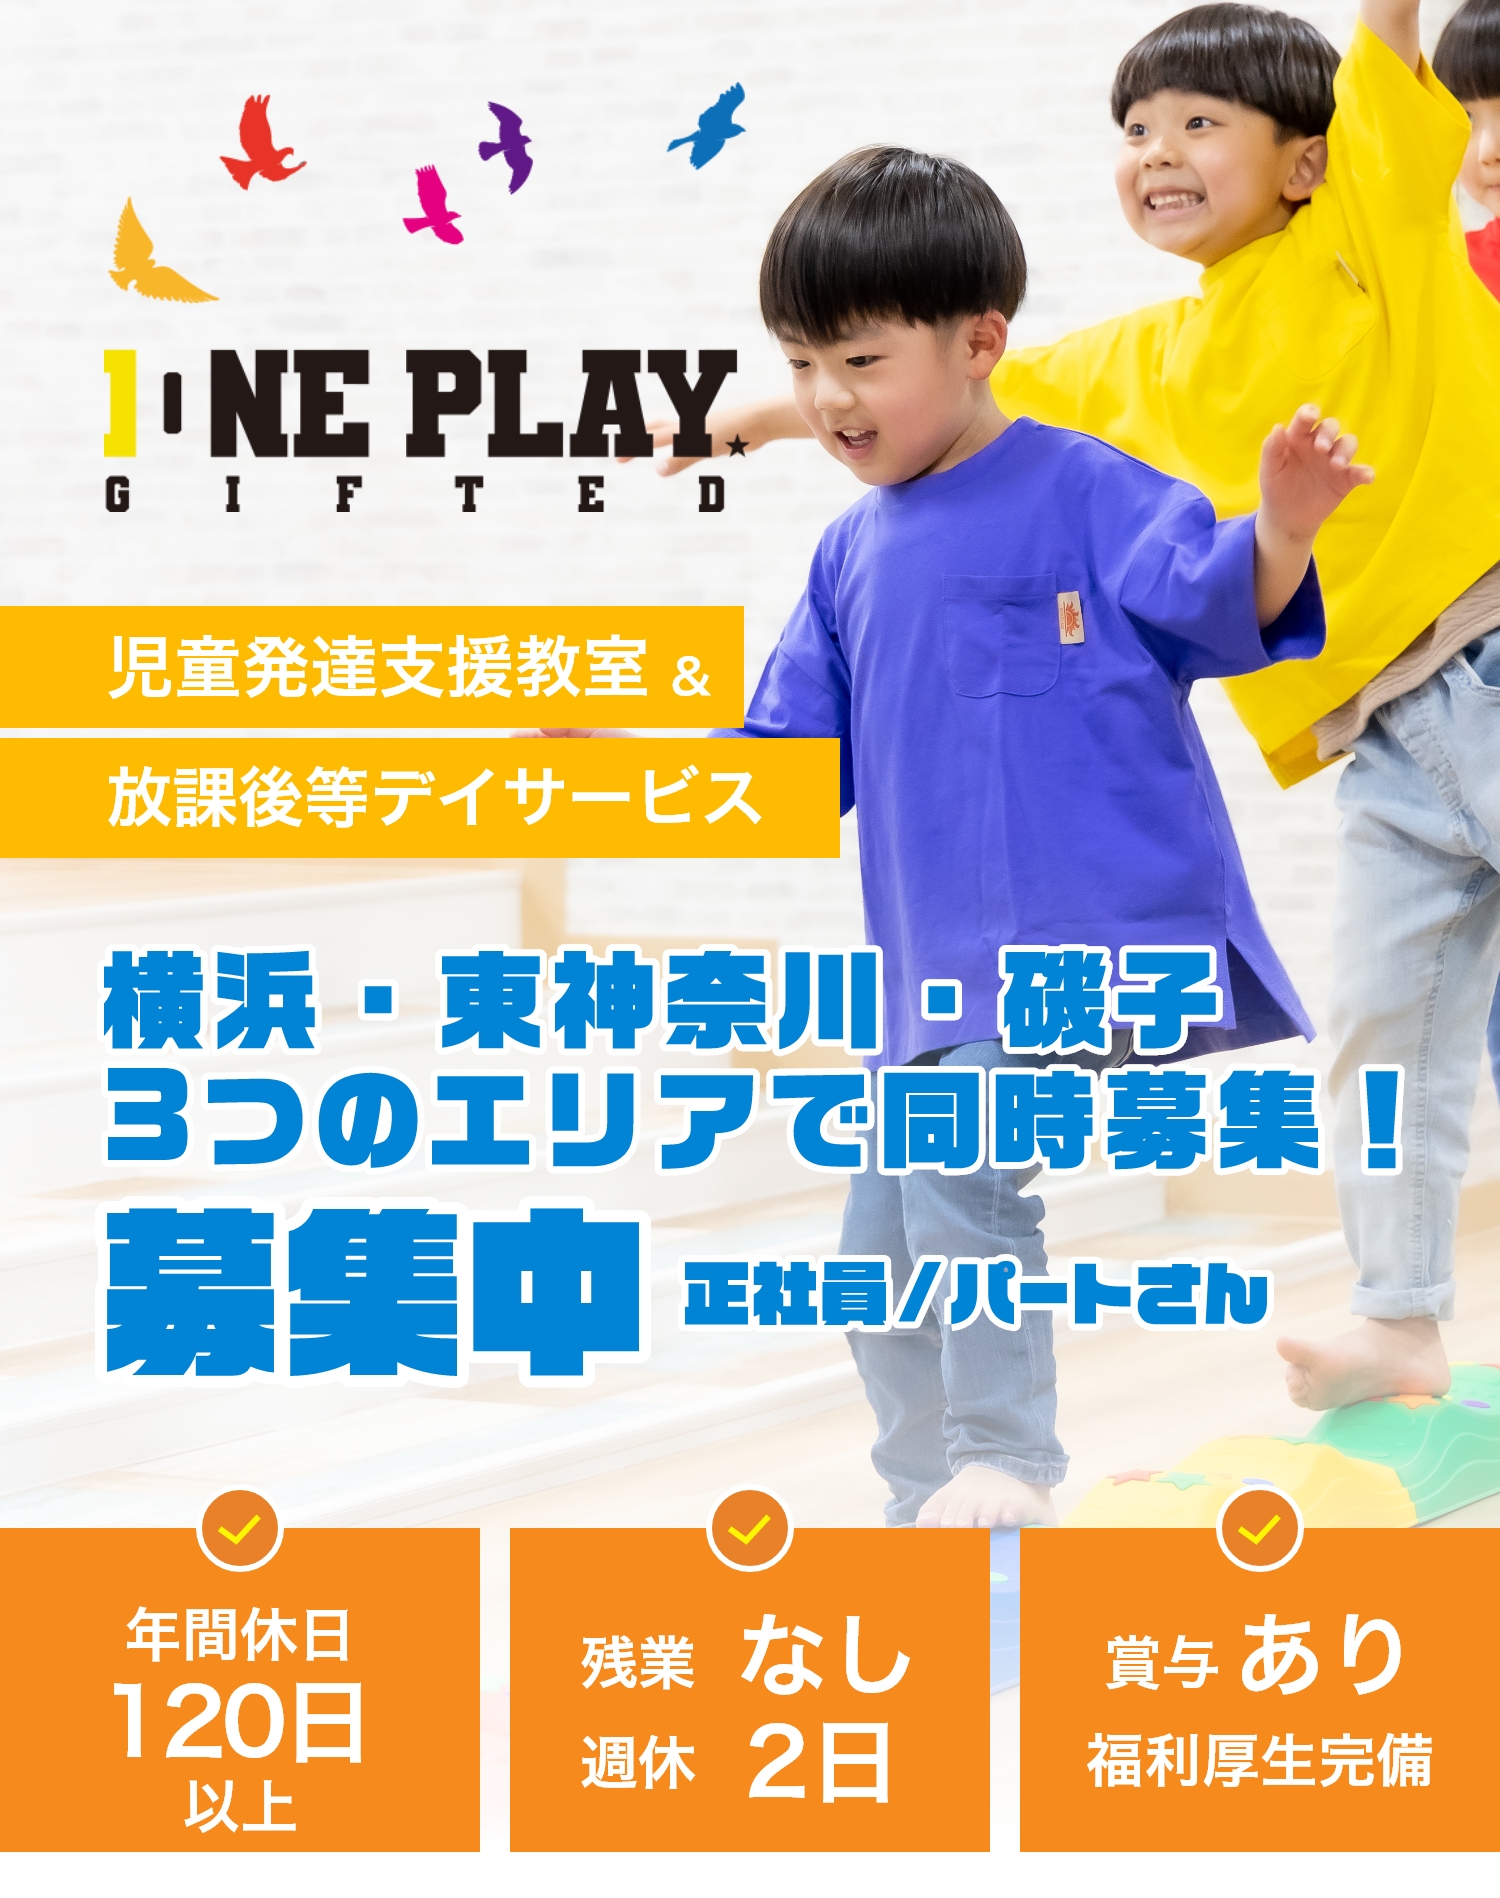 ONEPLAY. GIFTED 横濱元町に新規OPEN！発達障害を抱える未就学児のための療育教室